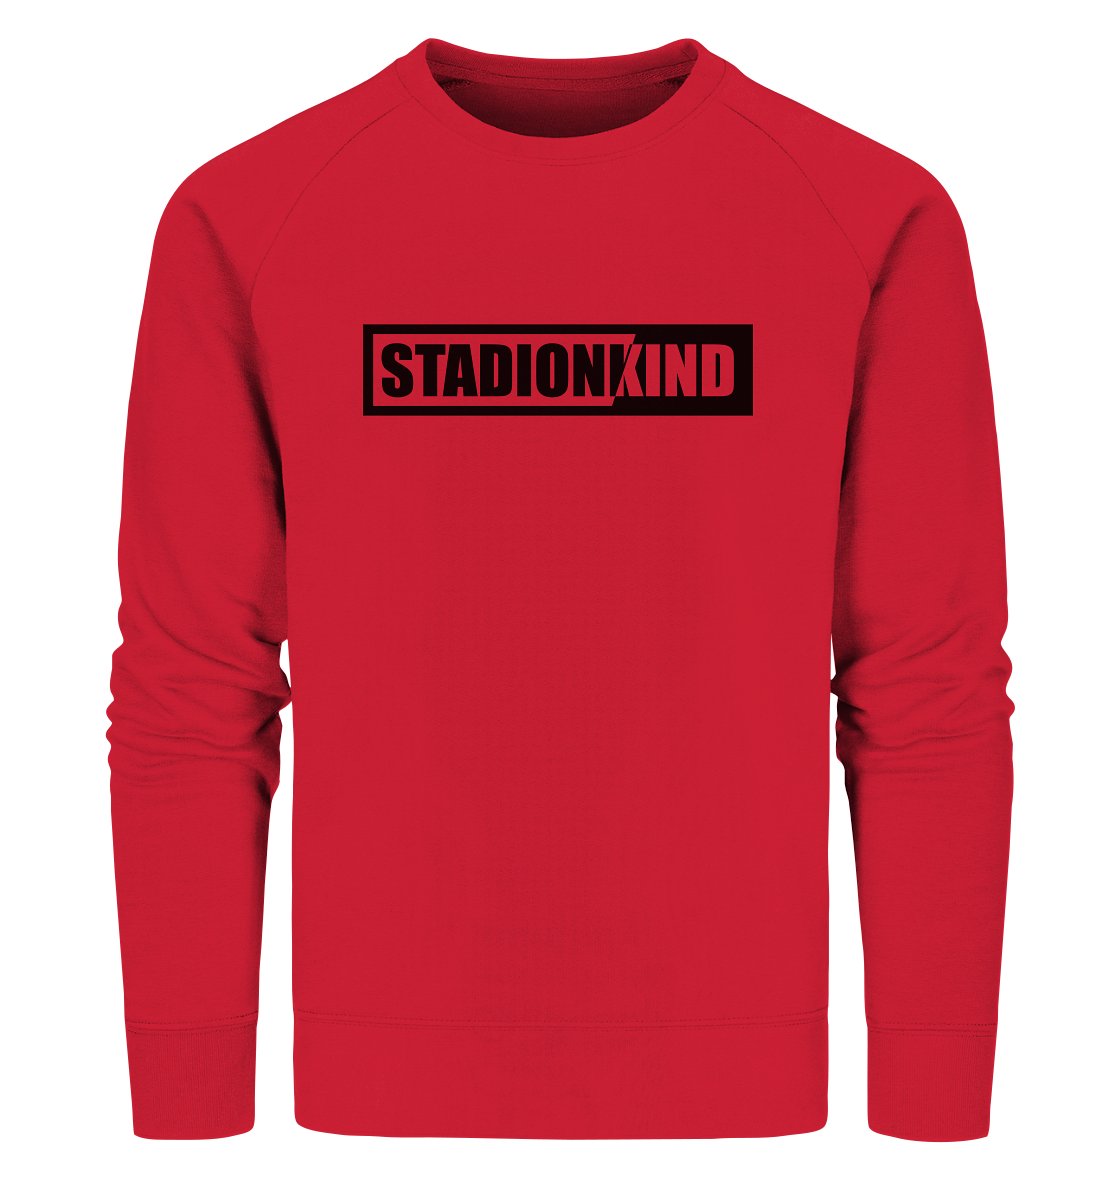 BLOCK.FC Fanblock Sweater "STADIONKIND" Männer Organic Sweatshirt rot